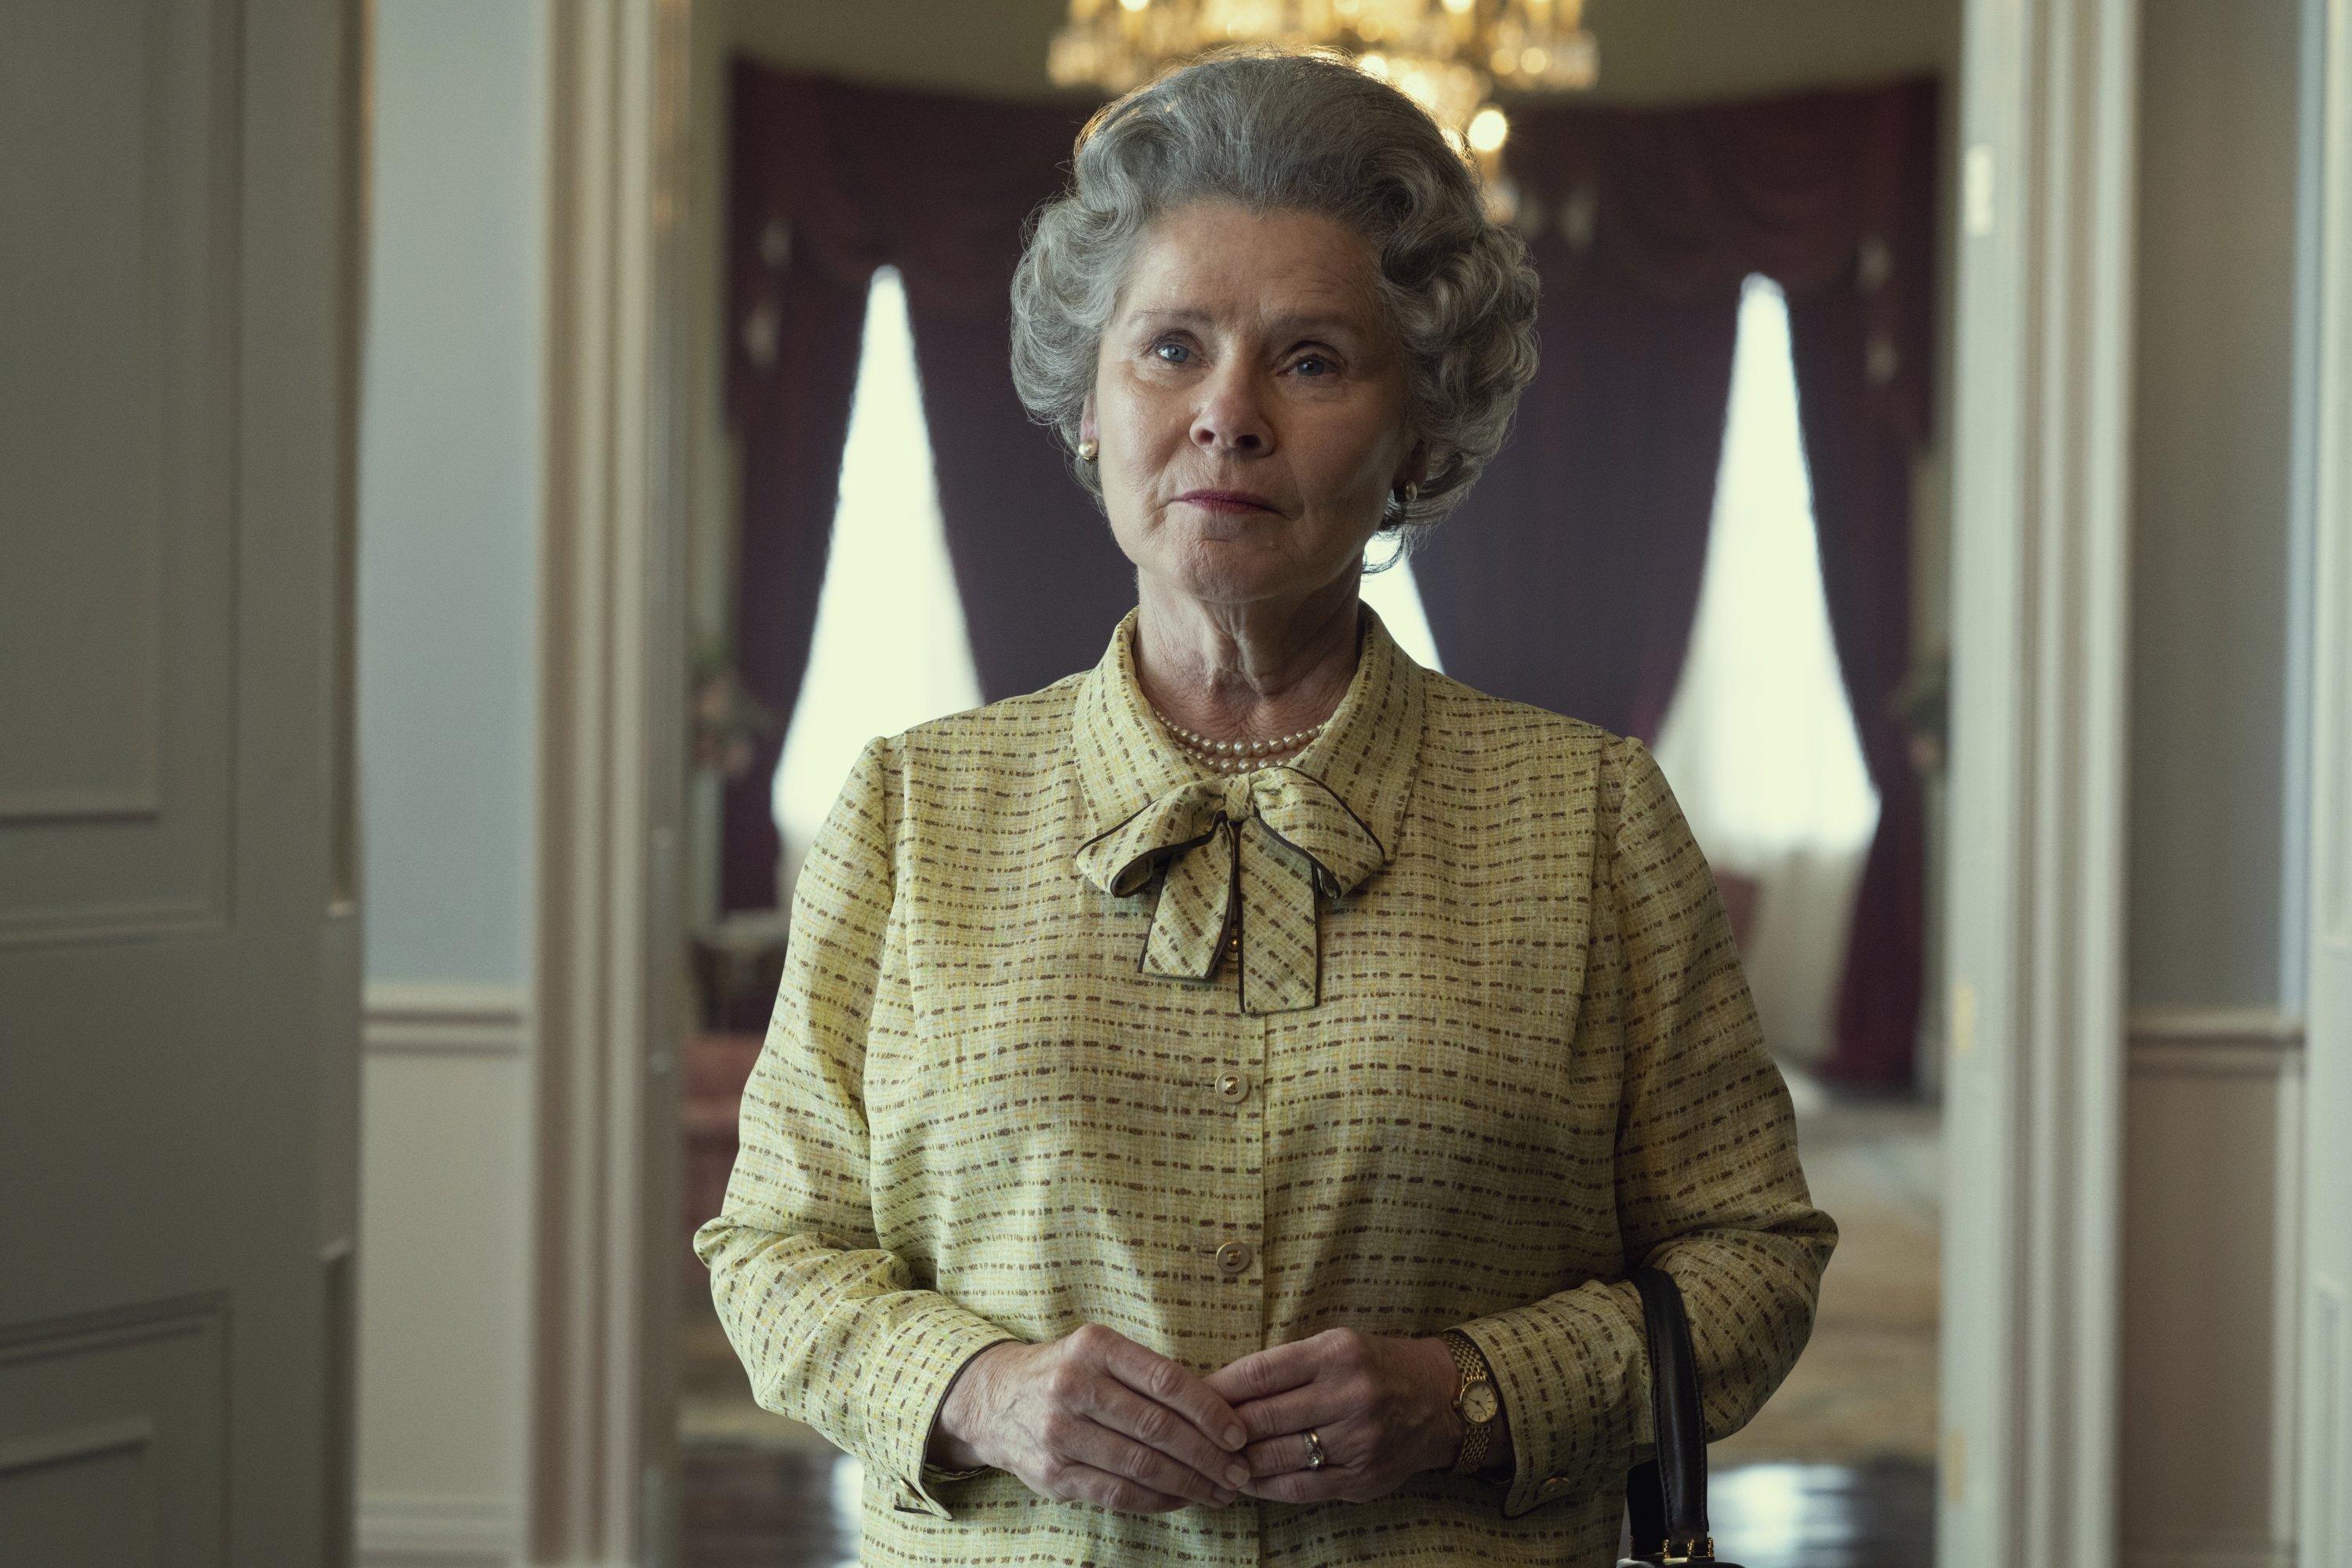 Gambar yang dirilis oleh Netflix ini menunjukkan Imelda Staunton sebagai Ratu Elizabeth di 